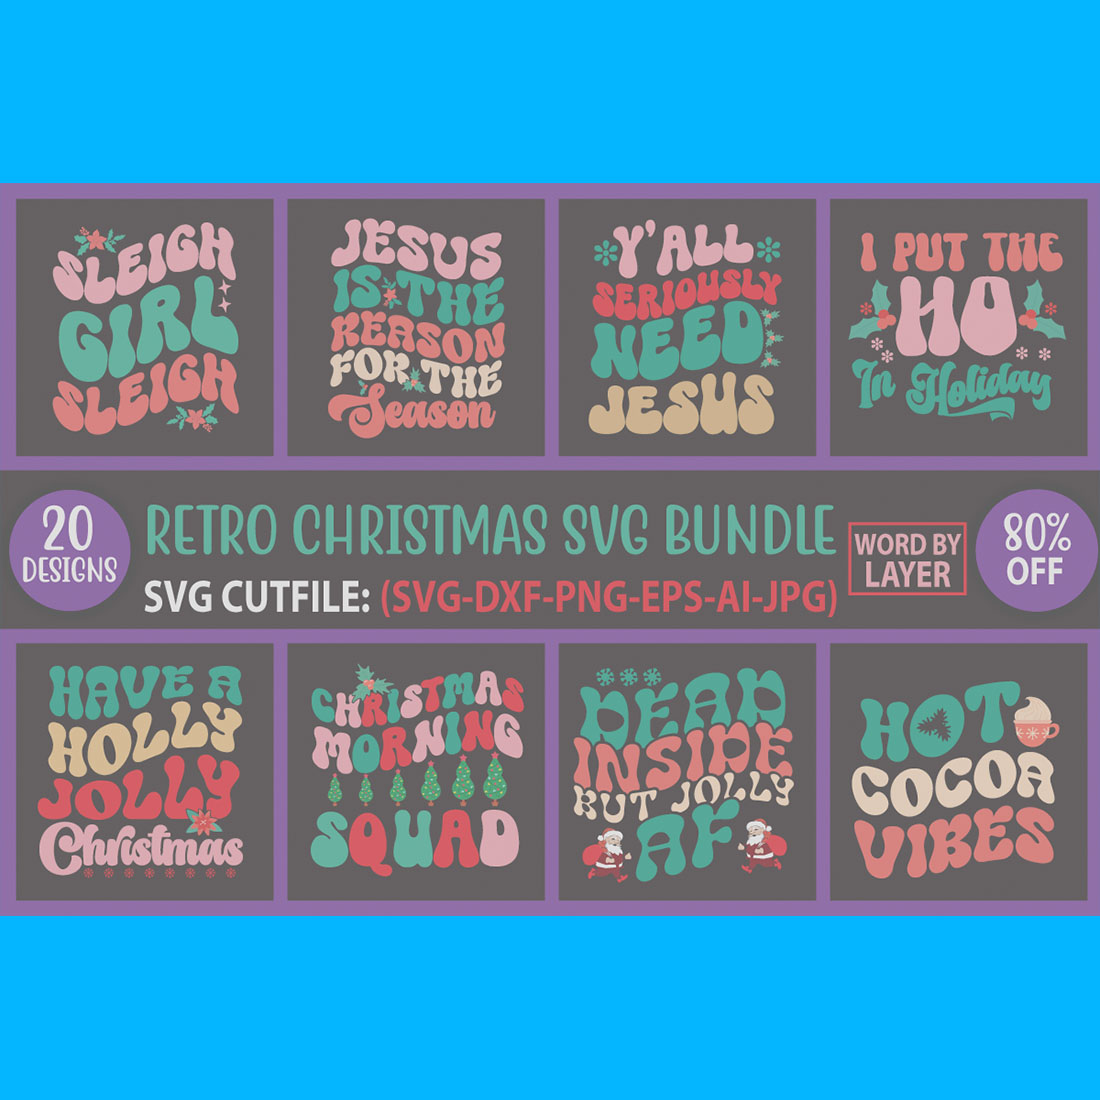 Retro Typography Christmas SVG Bundle cover image.